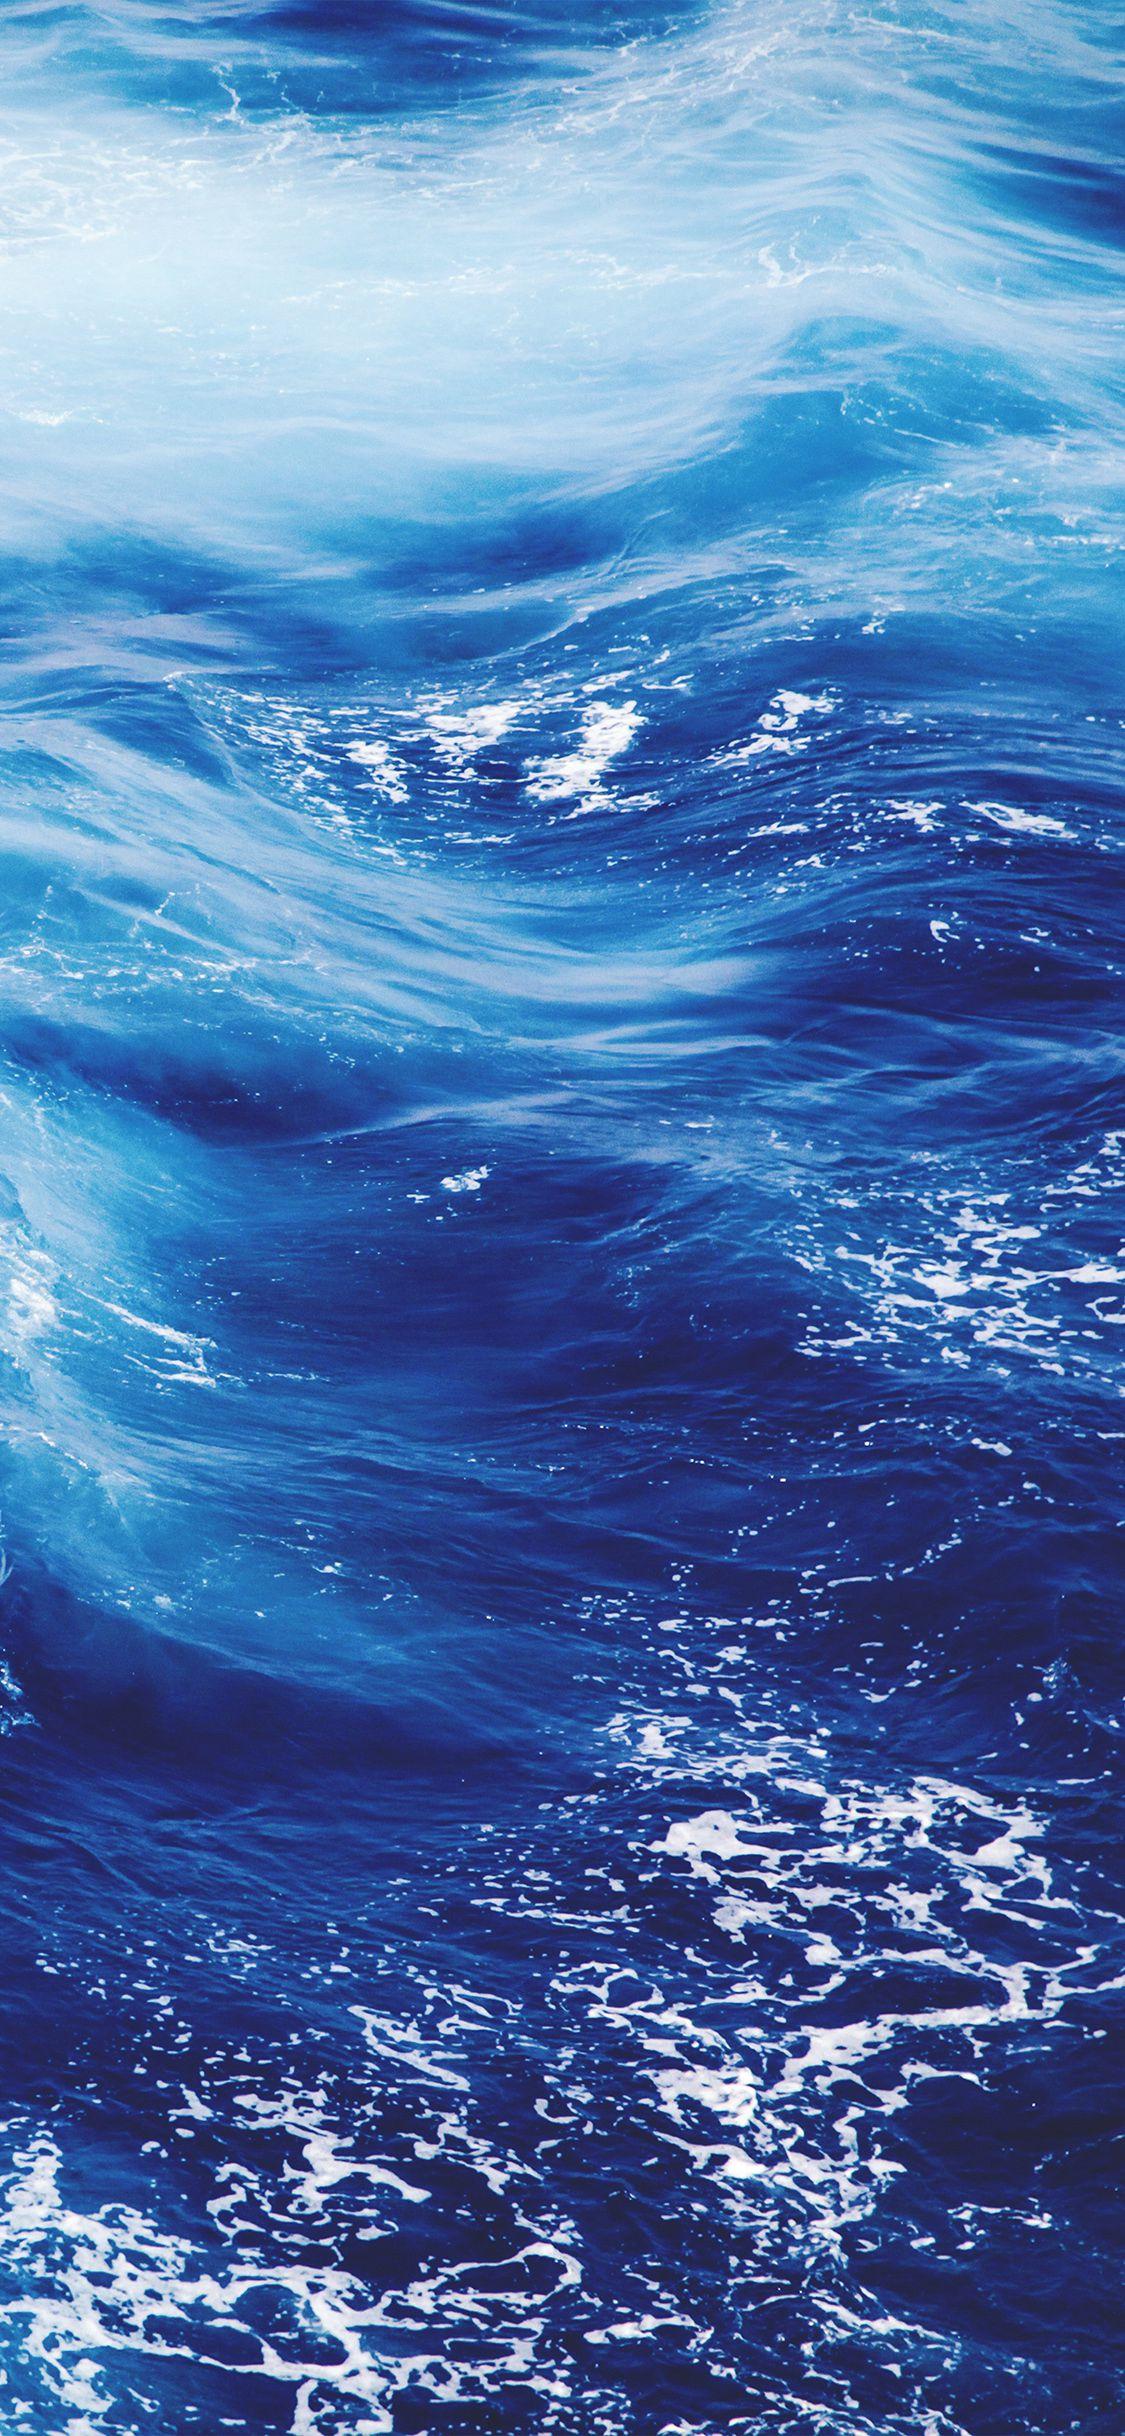 Wave water blue sea pattern iPhone X Wallpaper Free Download